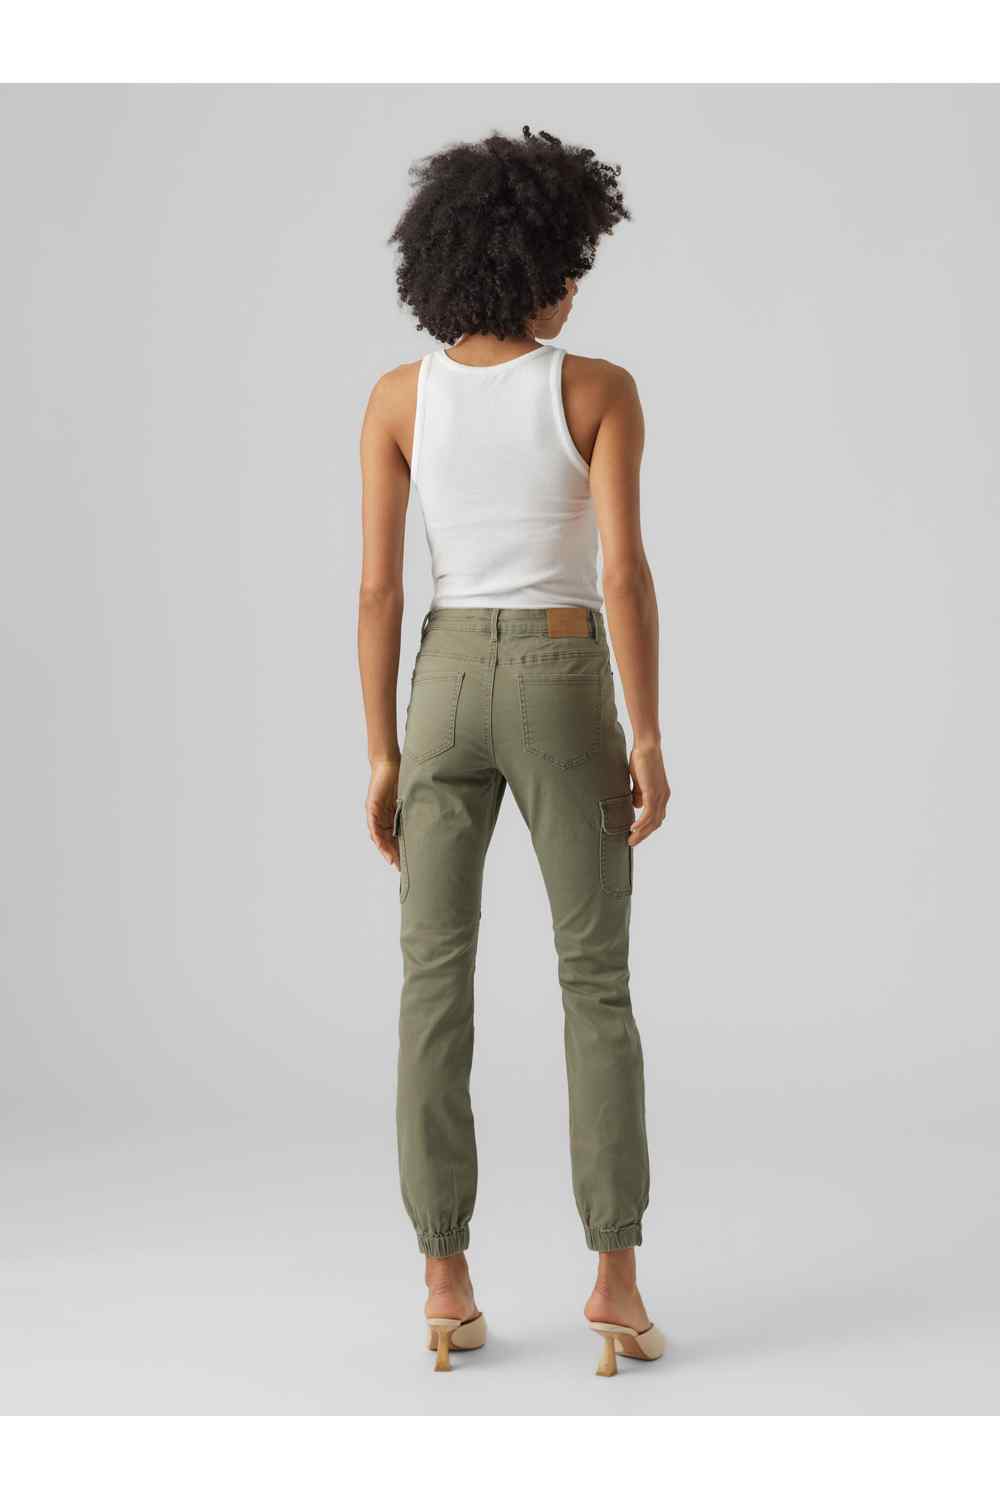 Vero Moda Ivy Cargo Pant - Green 6 Shaws Department Stores